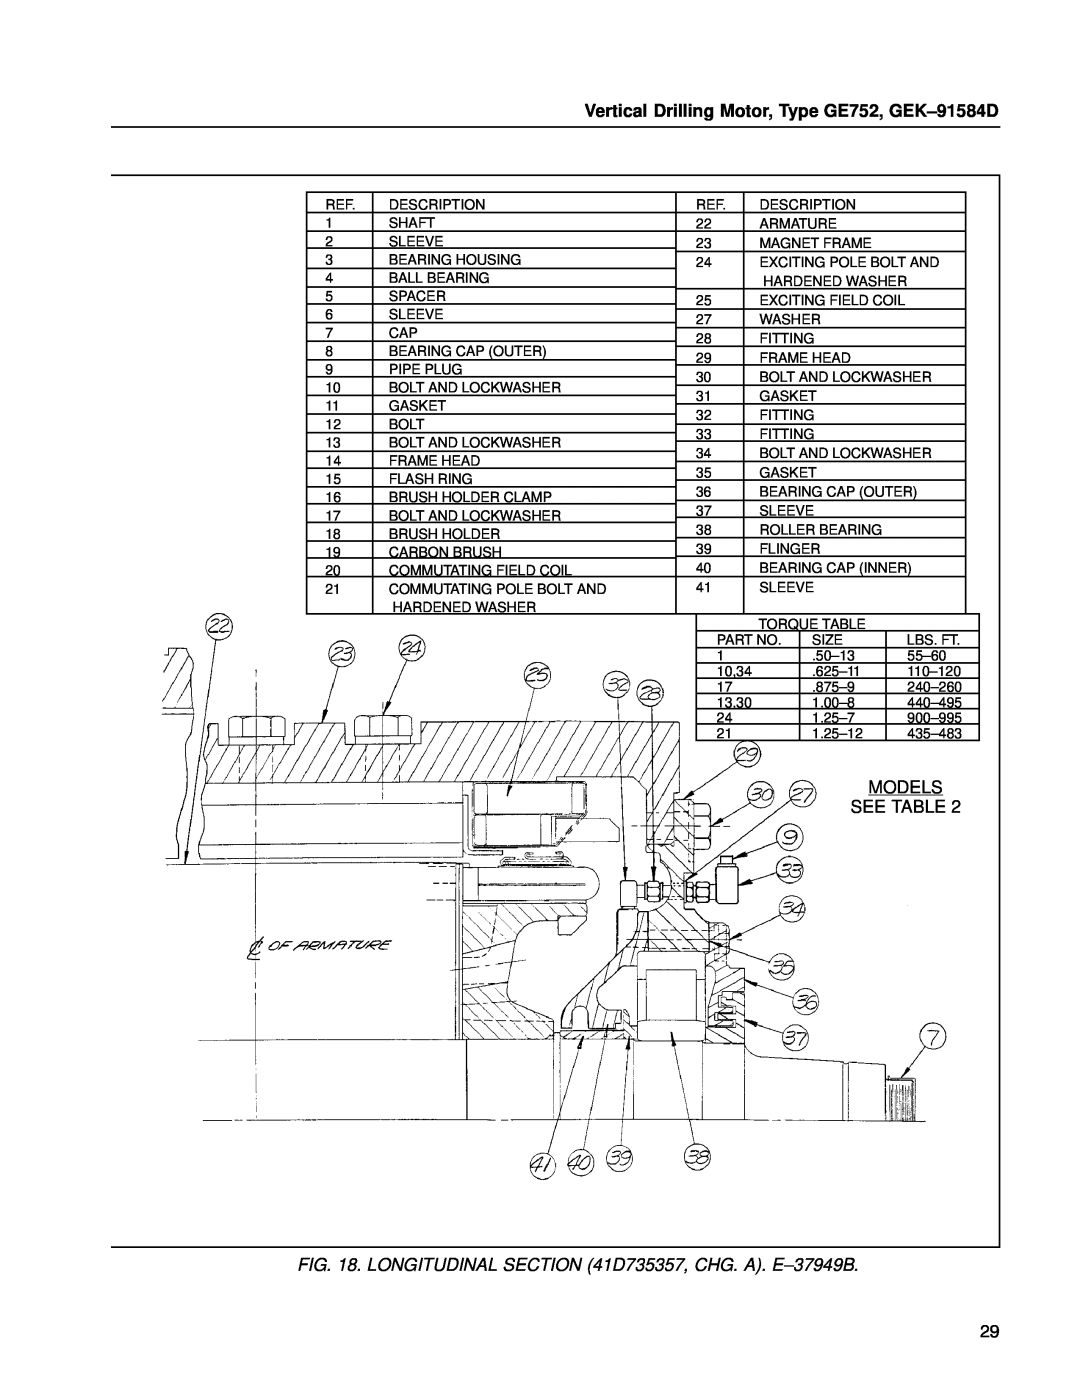 GE manual Vertical Drilling Motor, Type GE752, GEK±91584D, Models See Table, LONGITUDINAL D735357, CHG. A. E±37949B 